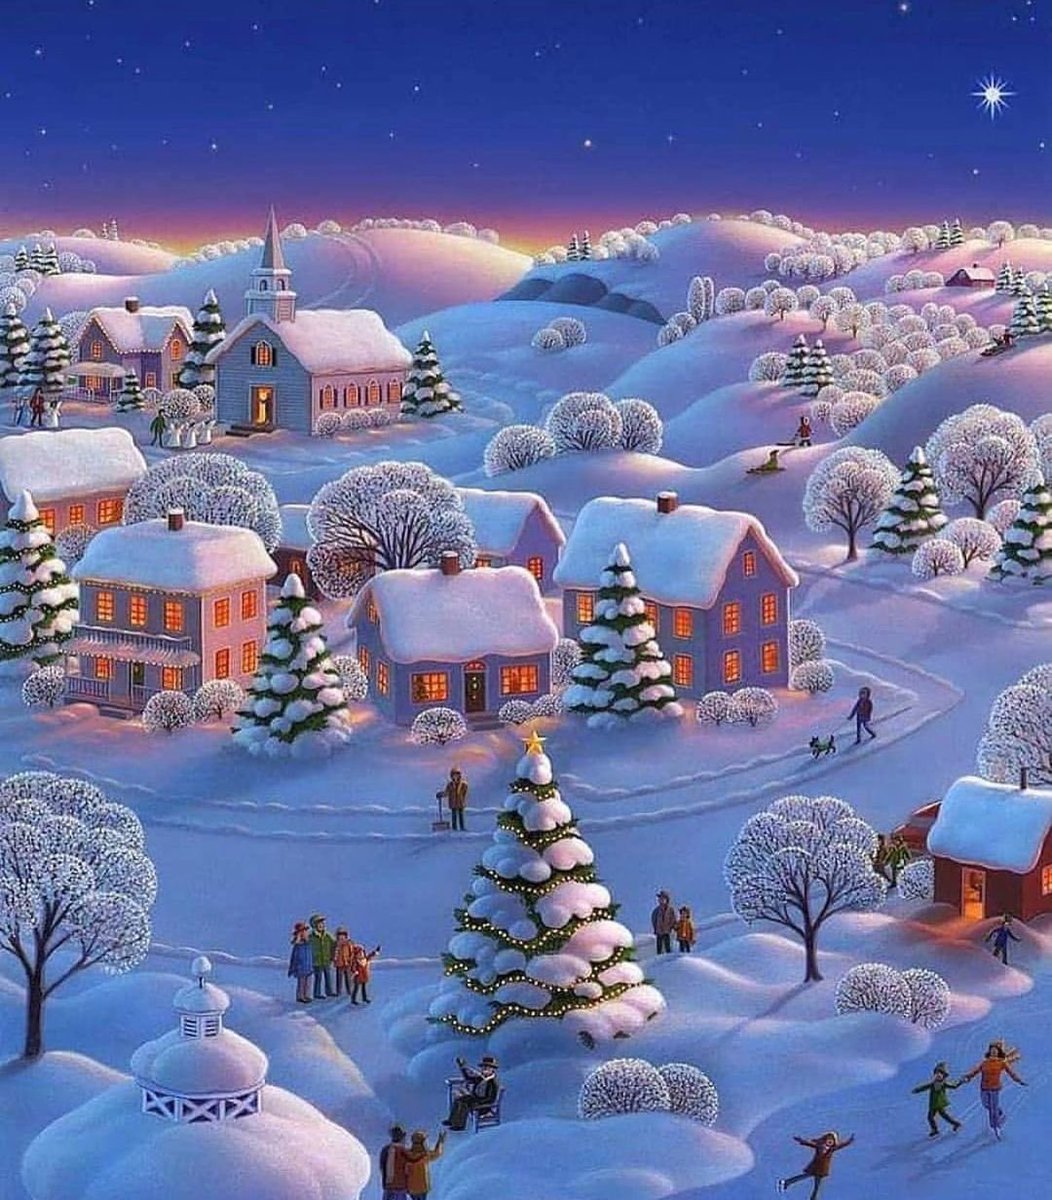 180 Days!!
#Christmas #ChristmasCountdown2023 #Christmasmagic #holidayseason  #MerryChristmas #Santa #ChristmasTree #Xmas #snowman #elf #christmascandy #Reindeer #christmascookies #folkart #newenglandchristmas